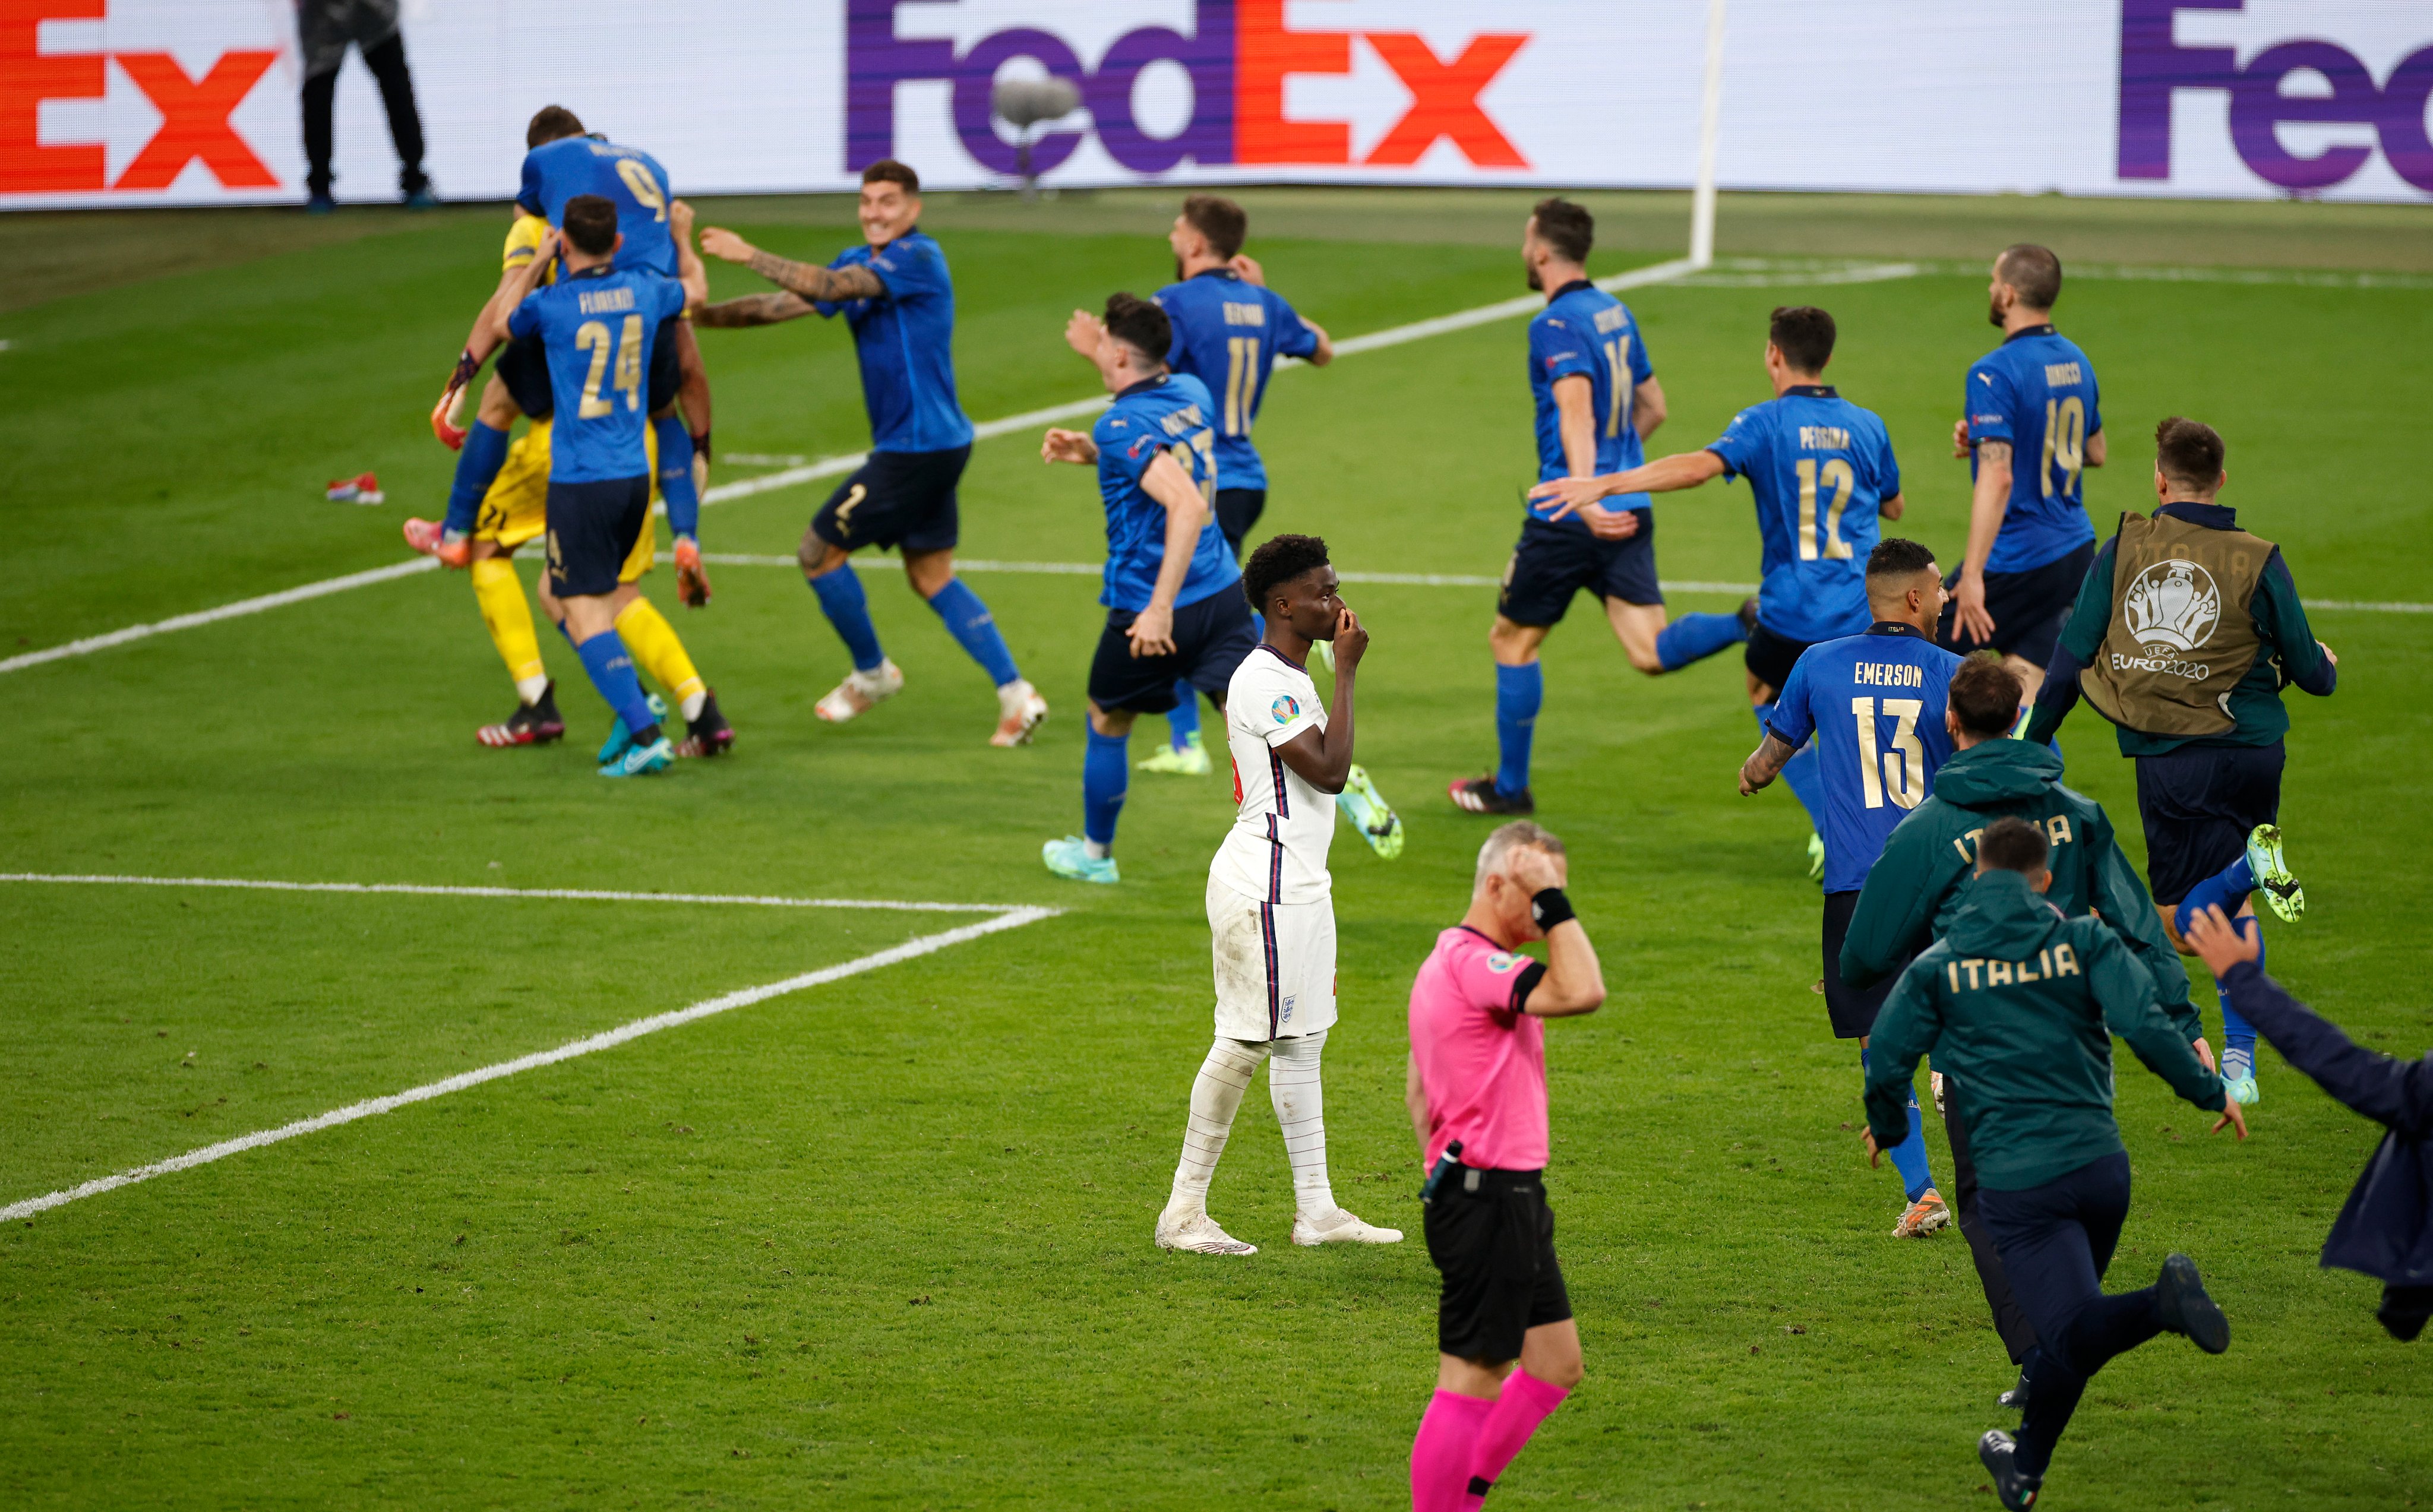 Festejo italiano, desazón inglesa. Donnarumma atajó el penal decisivo e Italia disfruta ser campeón de la Euro. 